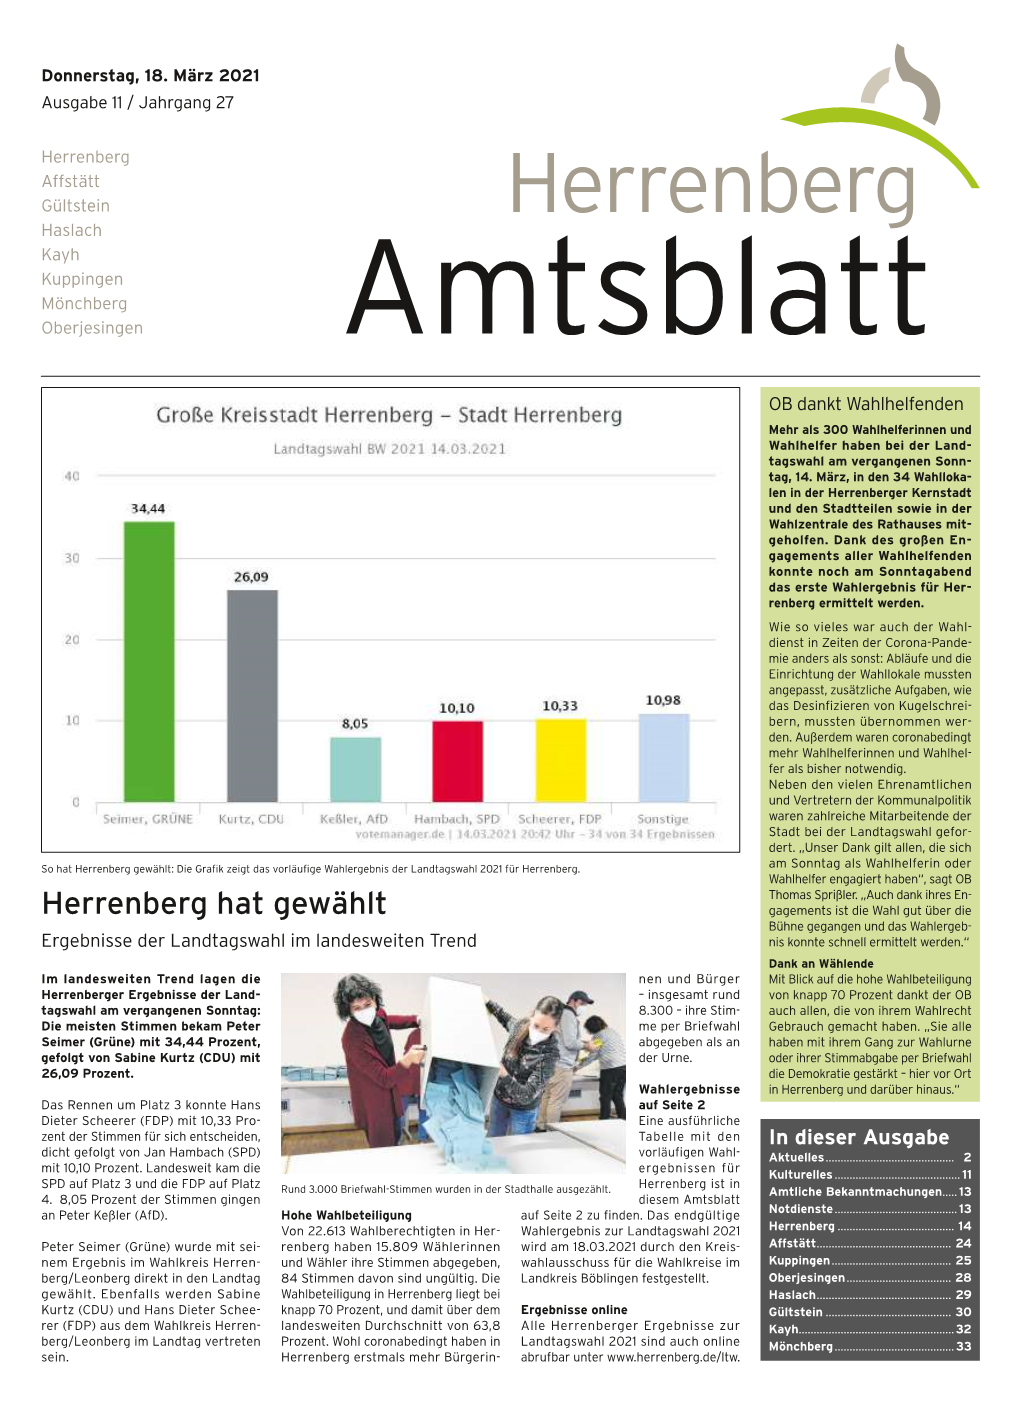 Amtsblatt Ausgabe 11/2021